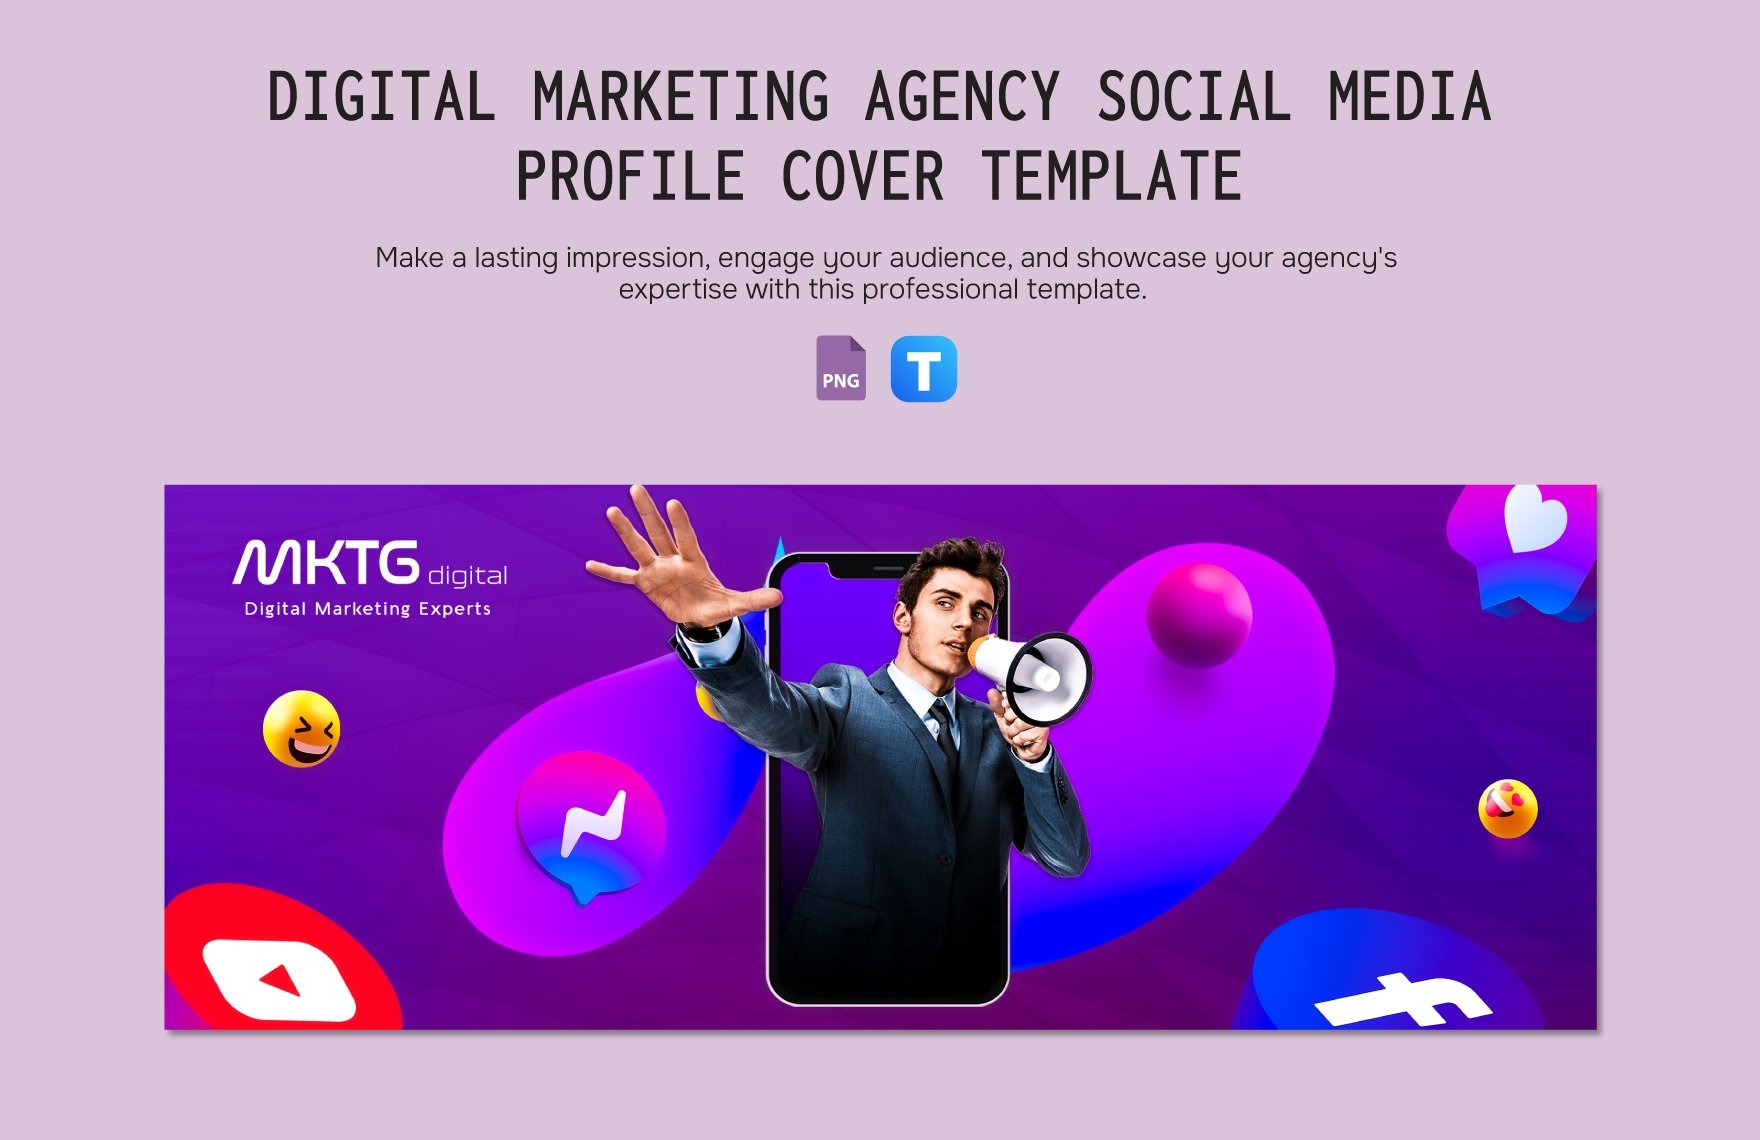 Digital Marketing Agency Social Media Profile Cover Template